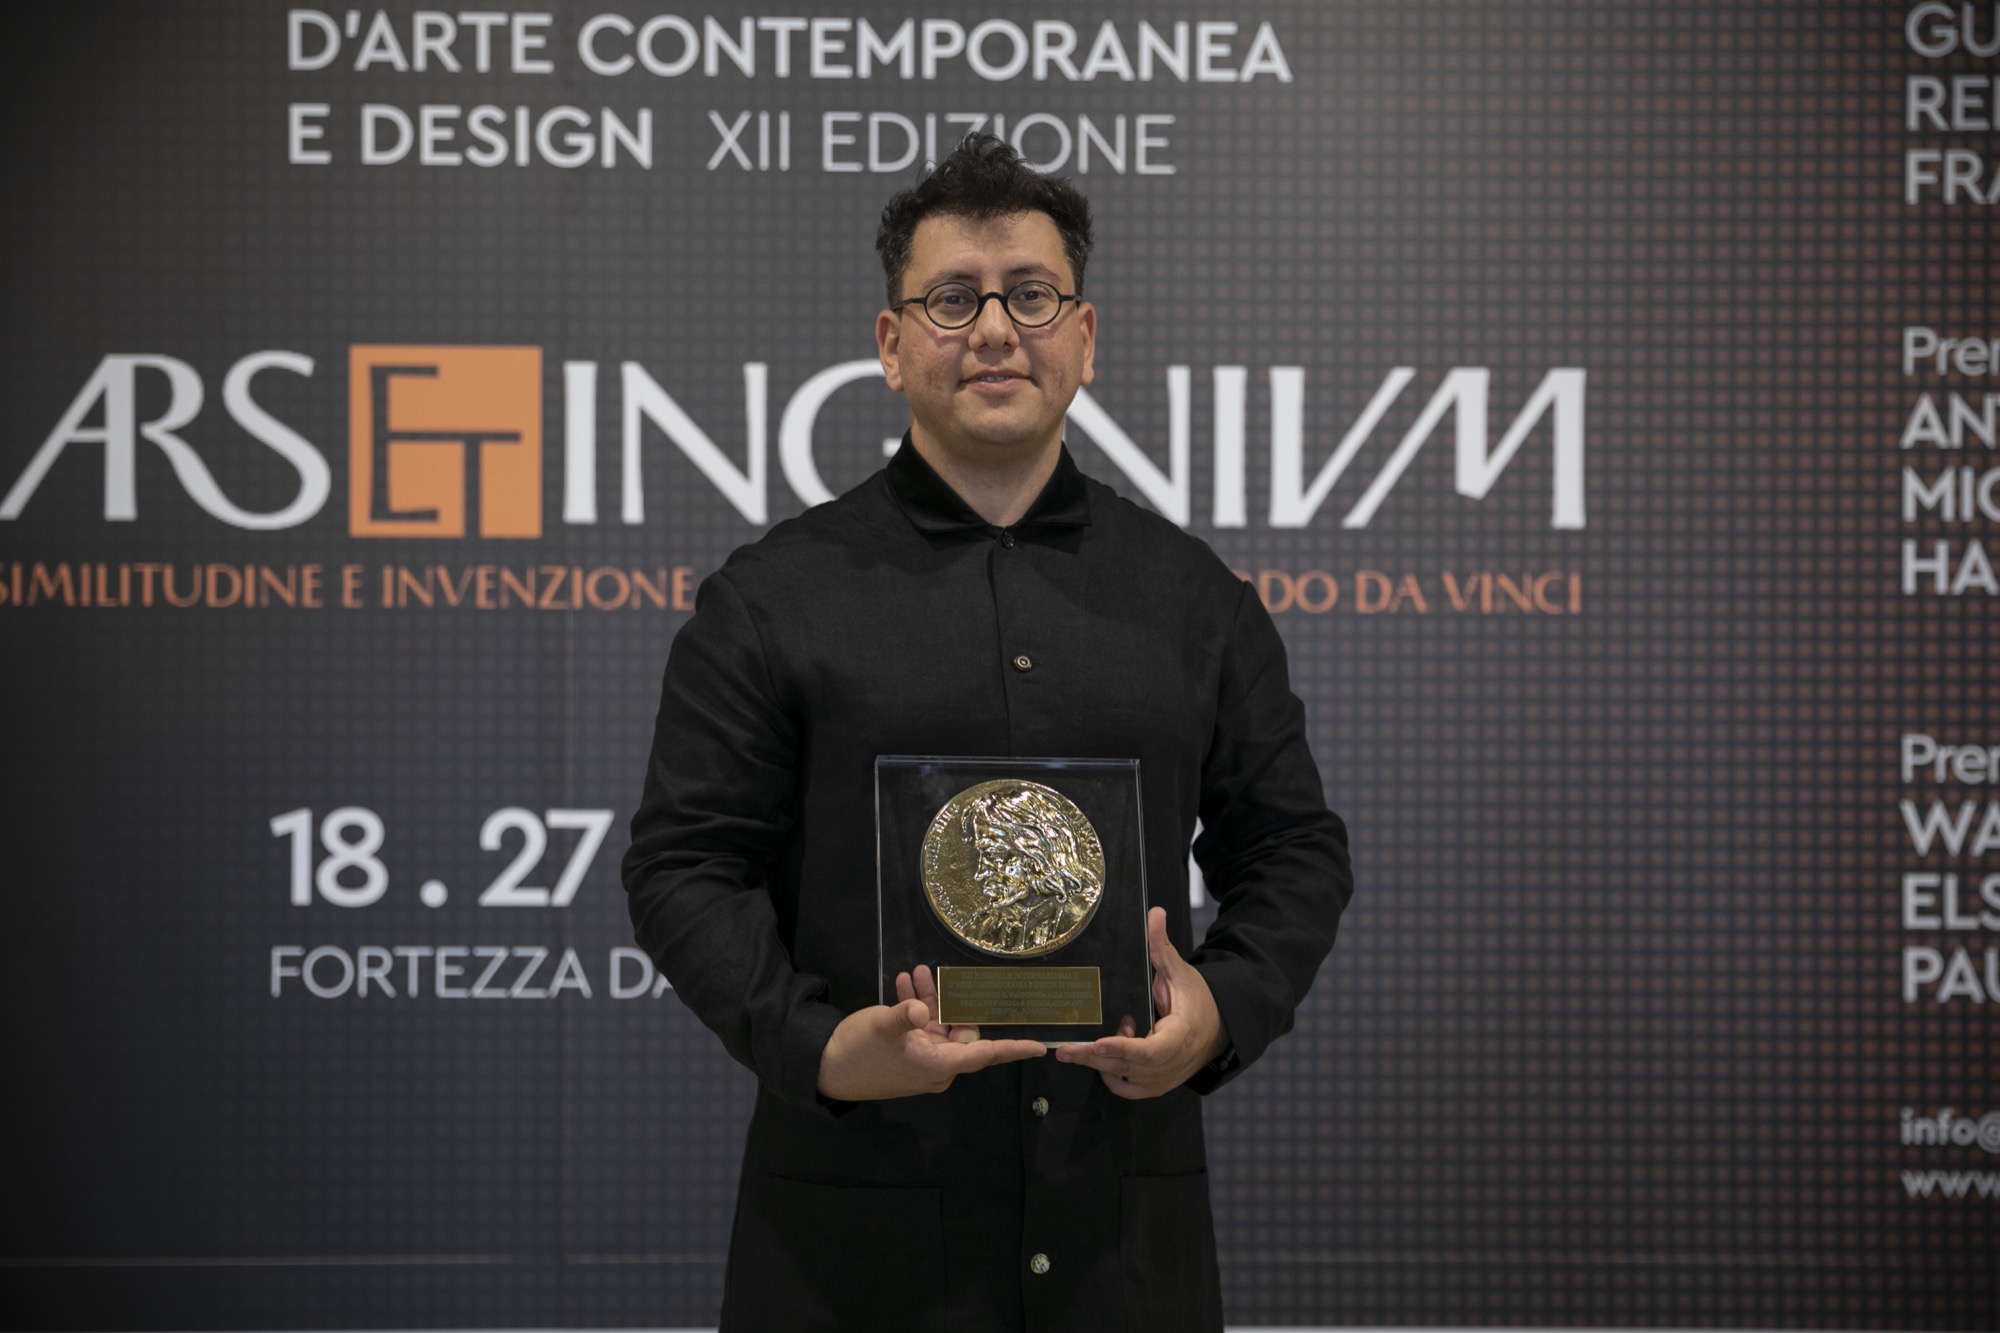 Refik Anadol, Premio Internazionale 